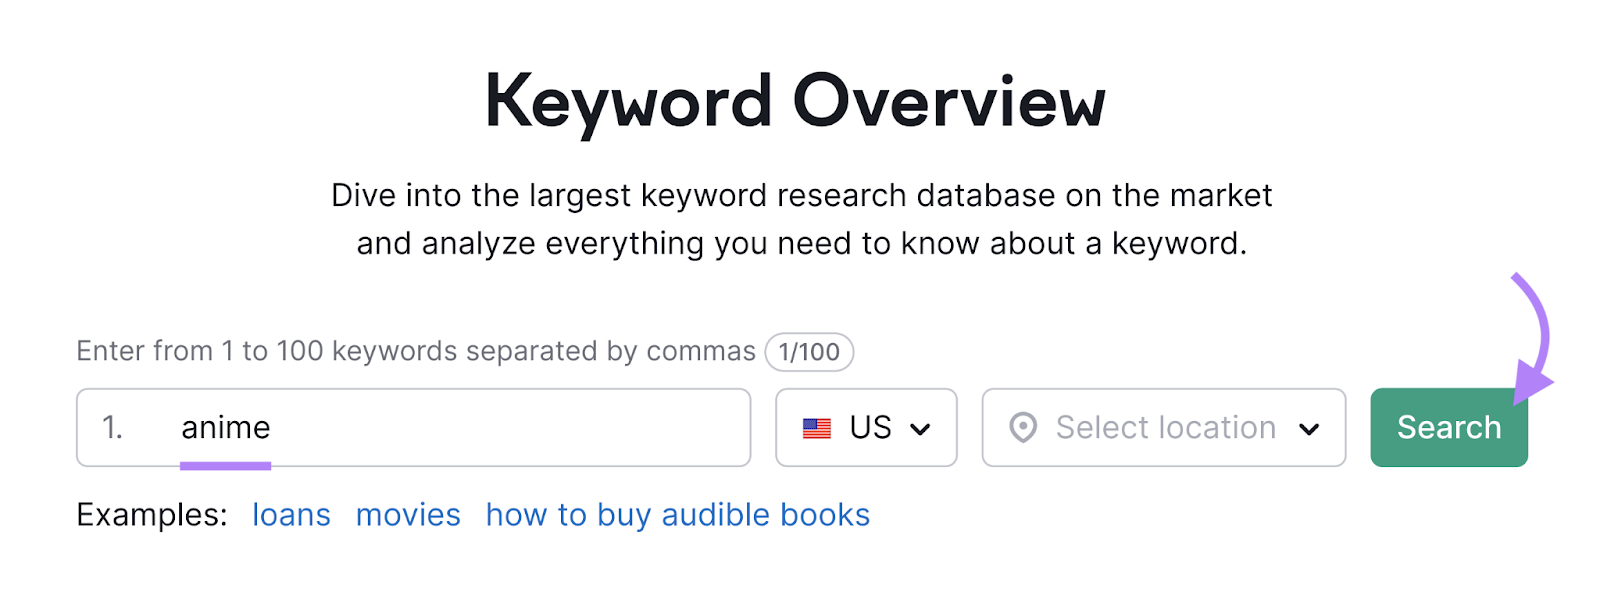 Semrush's Keyword Overview tool search for keyword anime